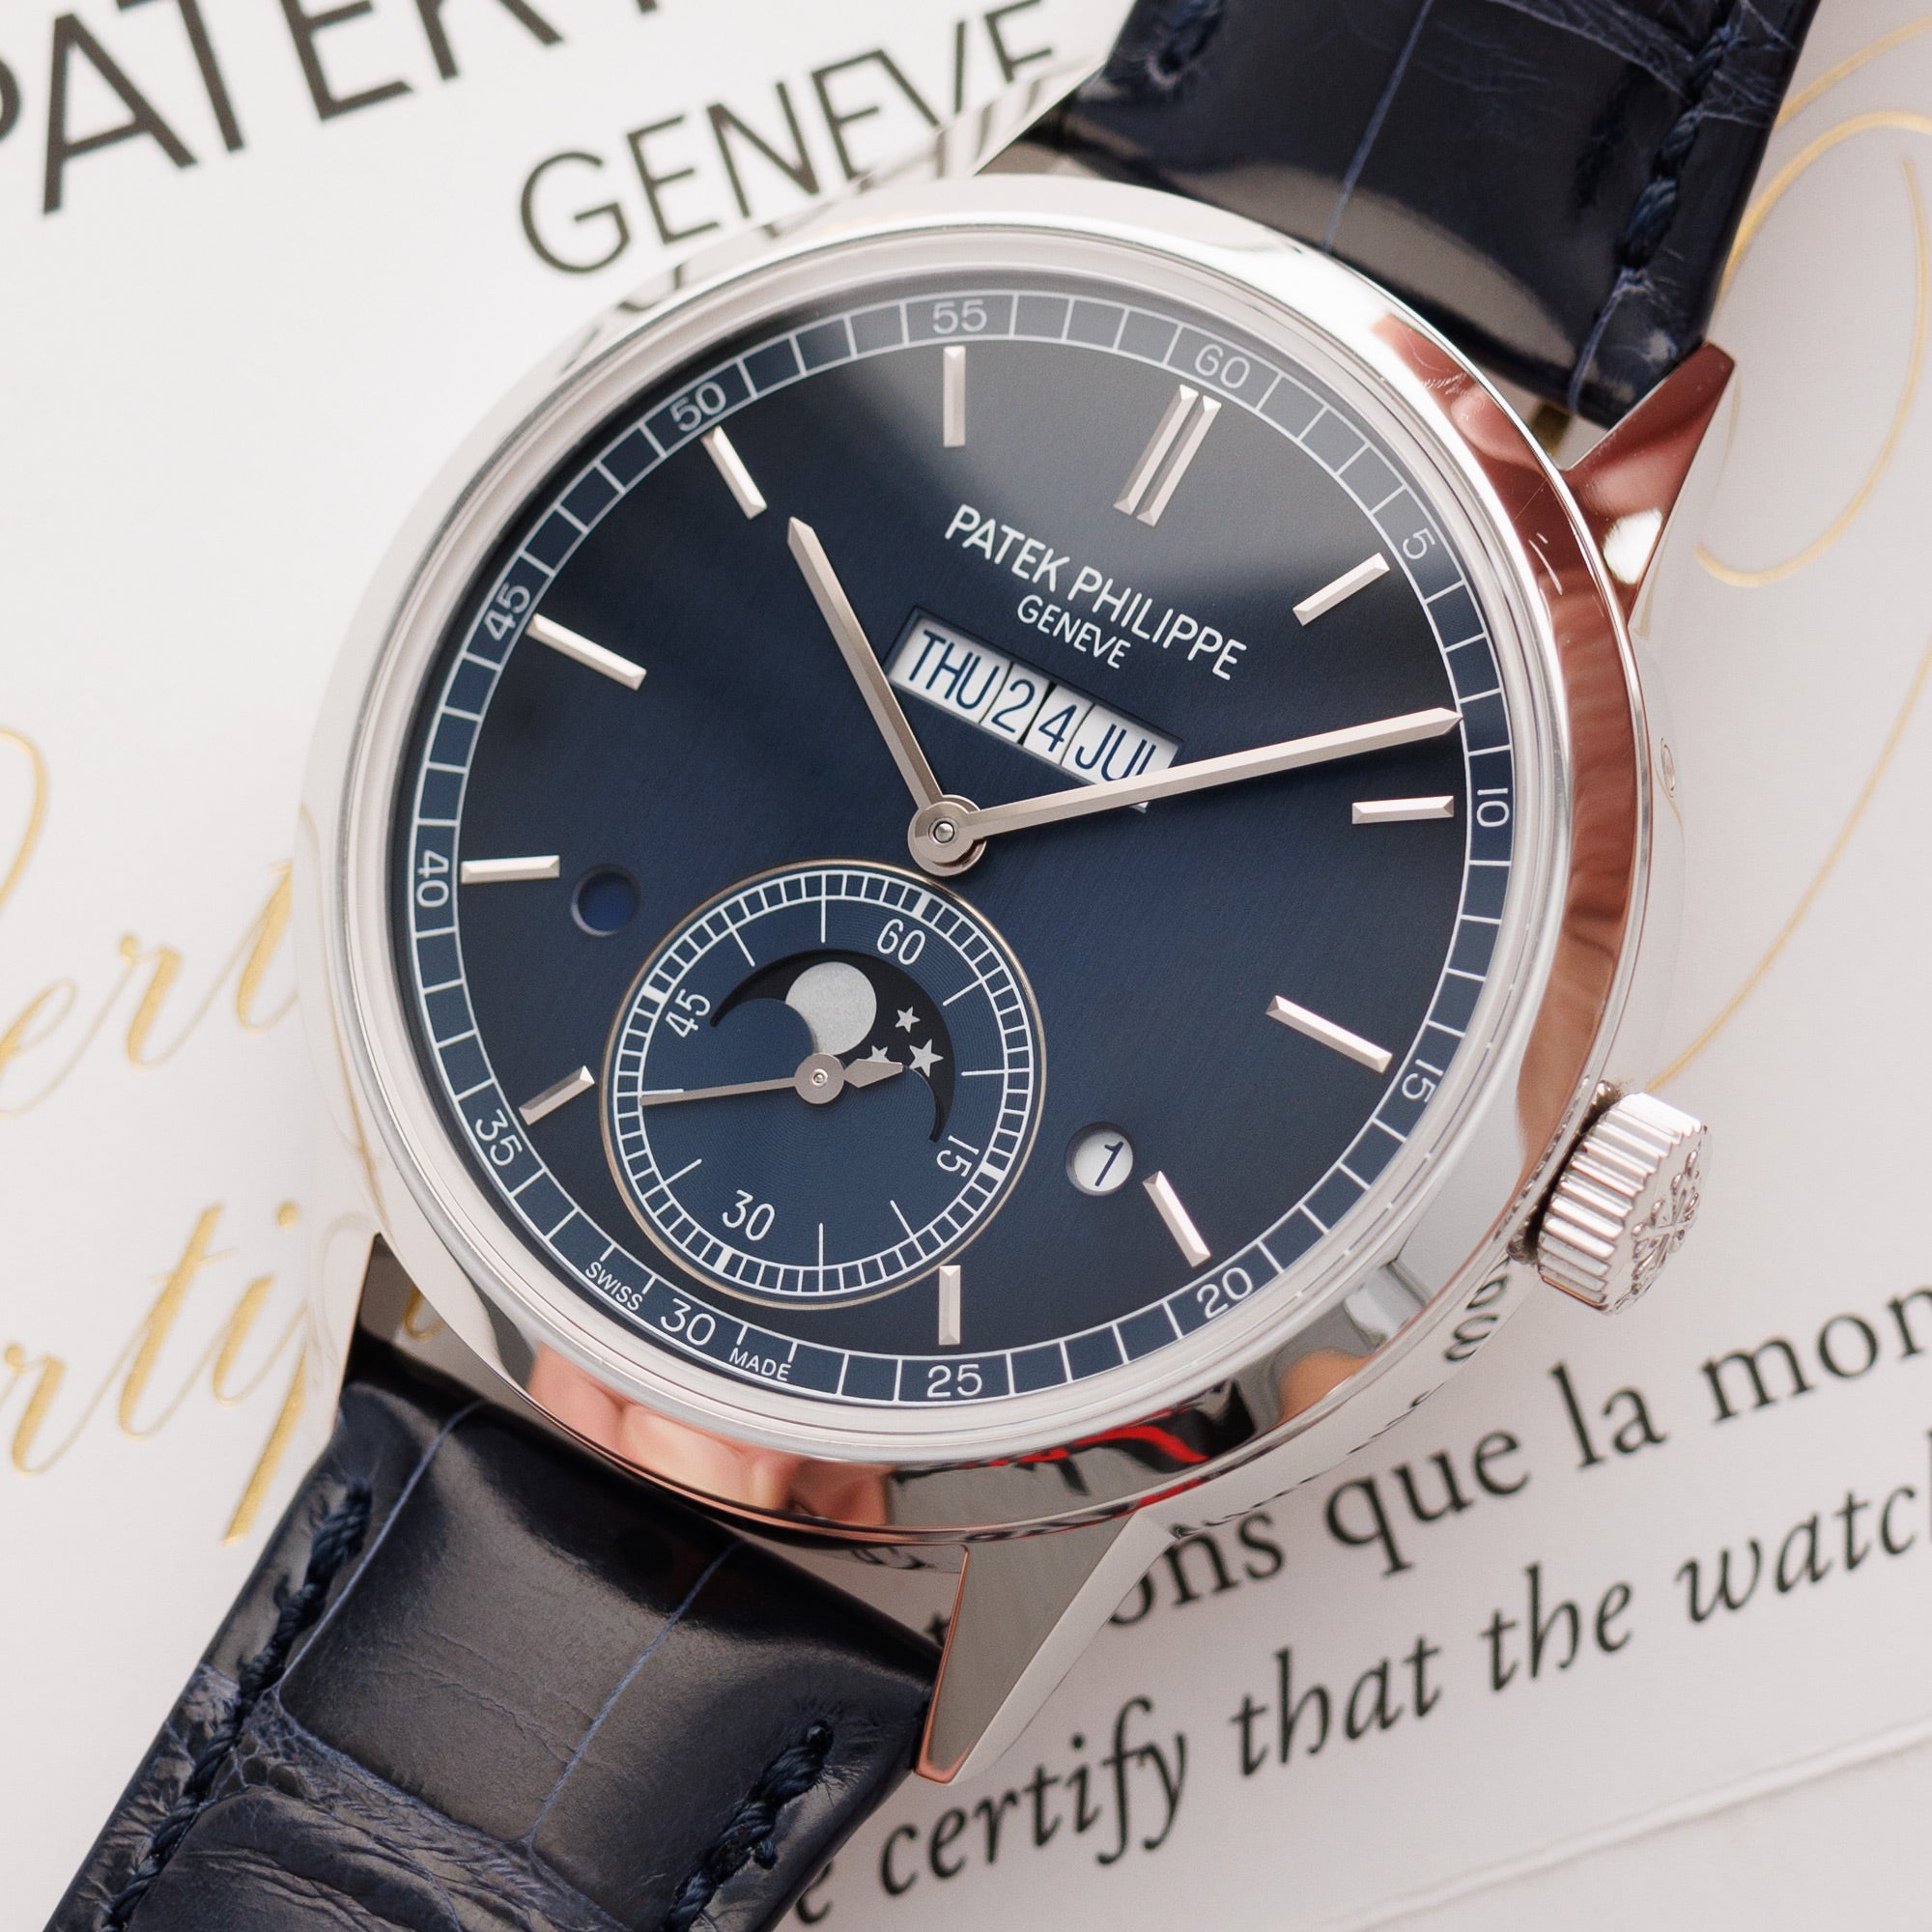 Patek Philippe - Patek Philippe Platinum Perpetual Calendar Watch Ref. 5236 - The Keystone Watches